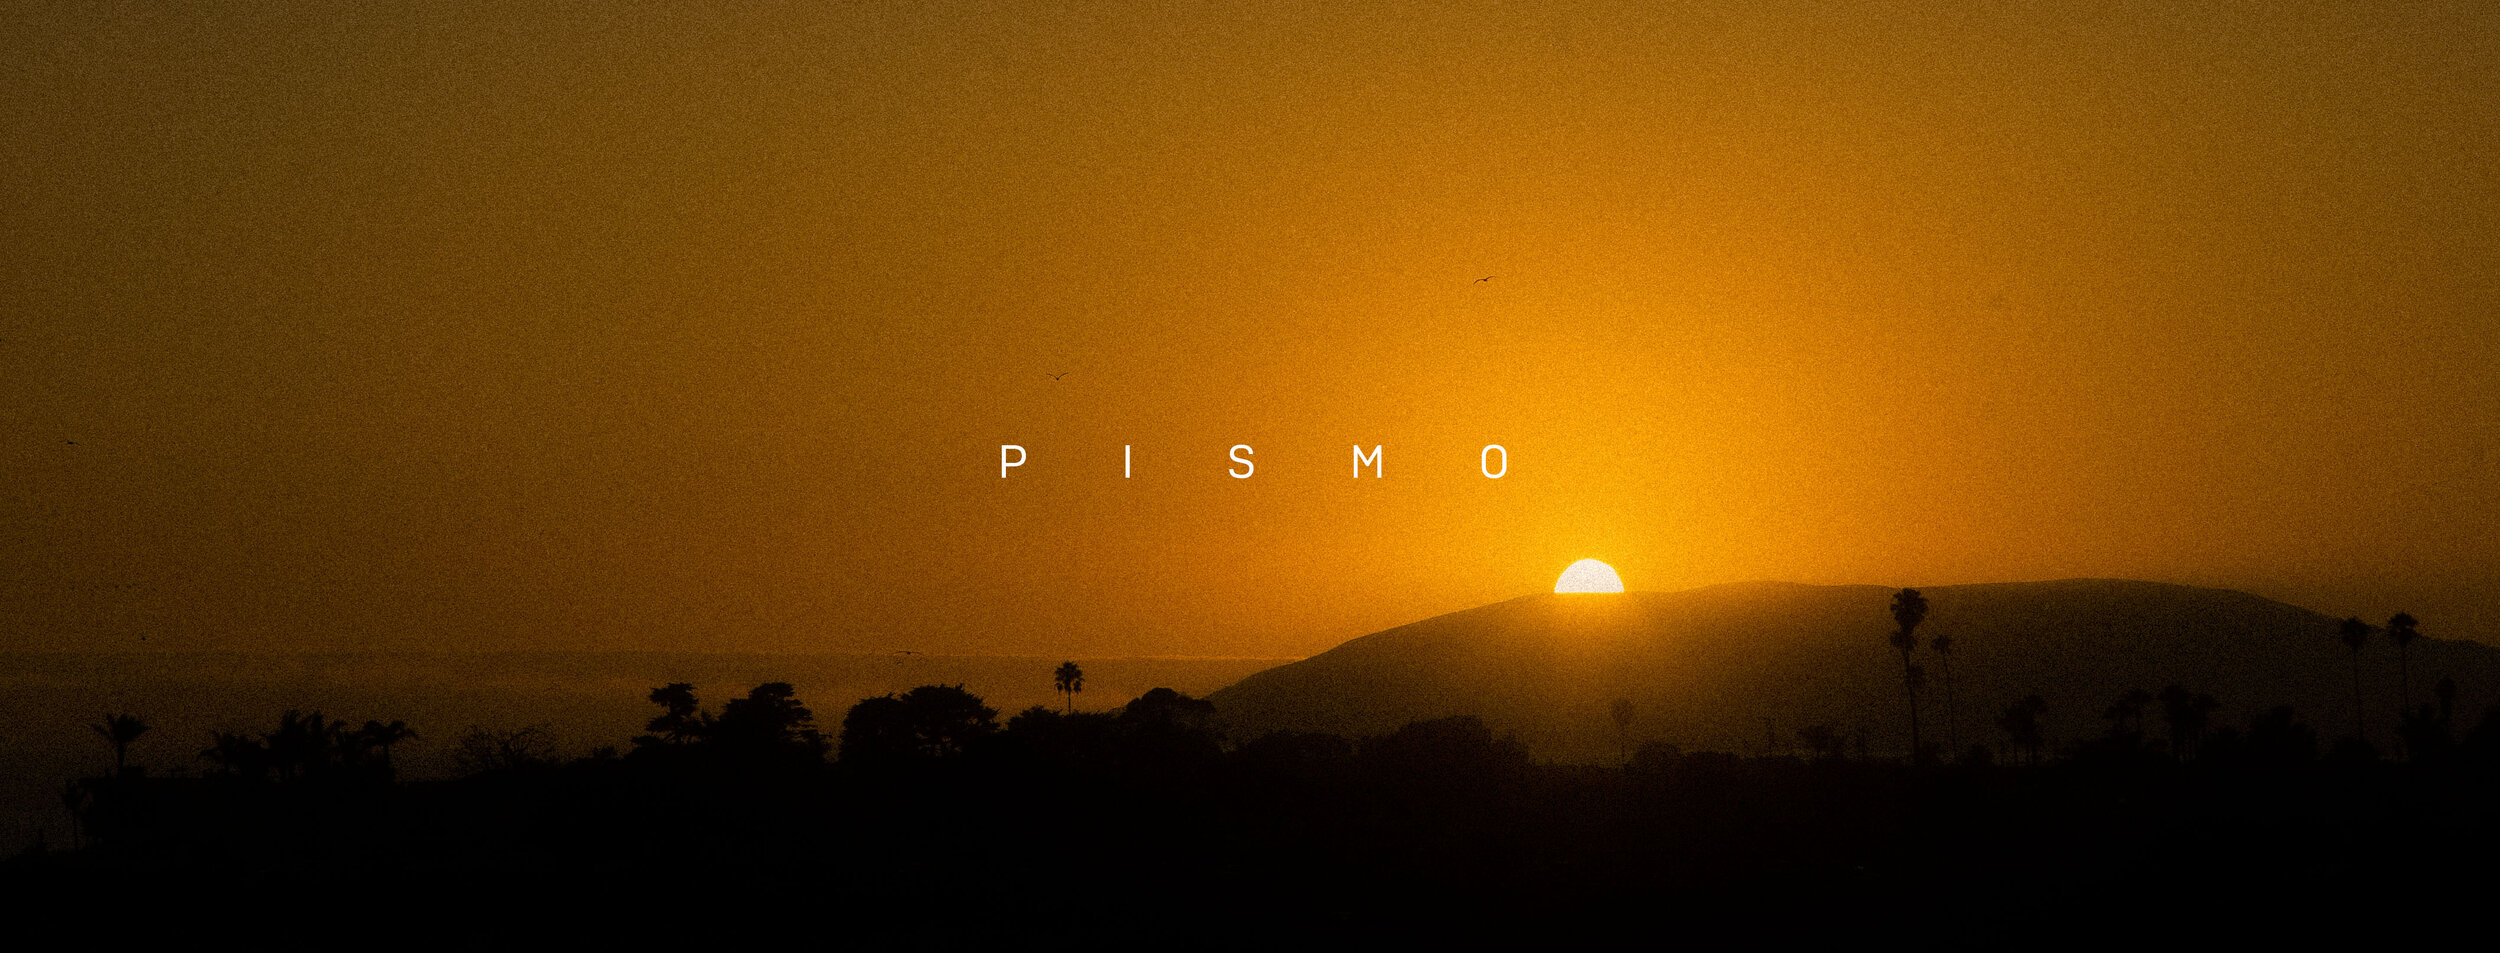 Pismo2.jpg